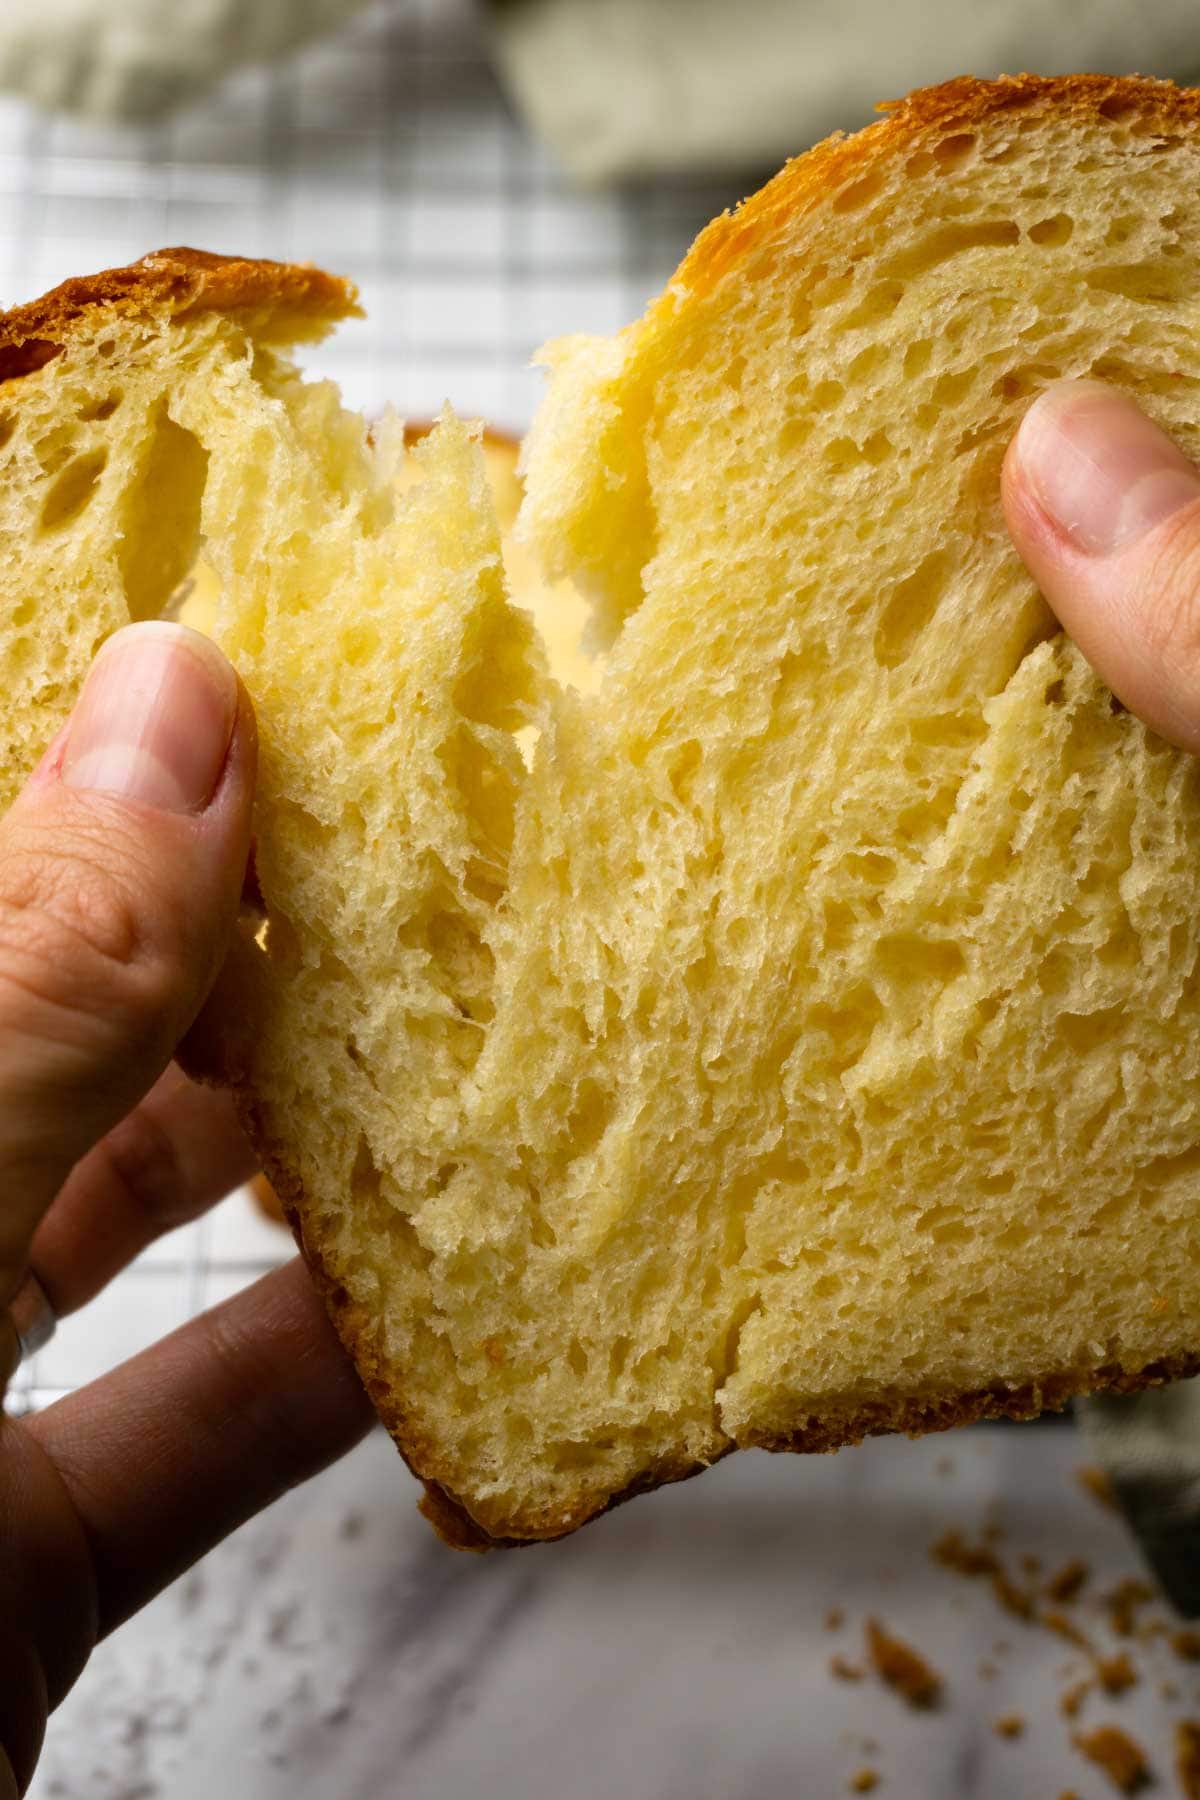 Hands rip apart a slice of freshly baked brioche bread.